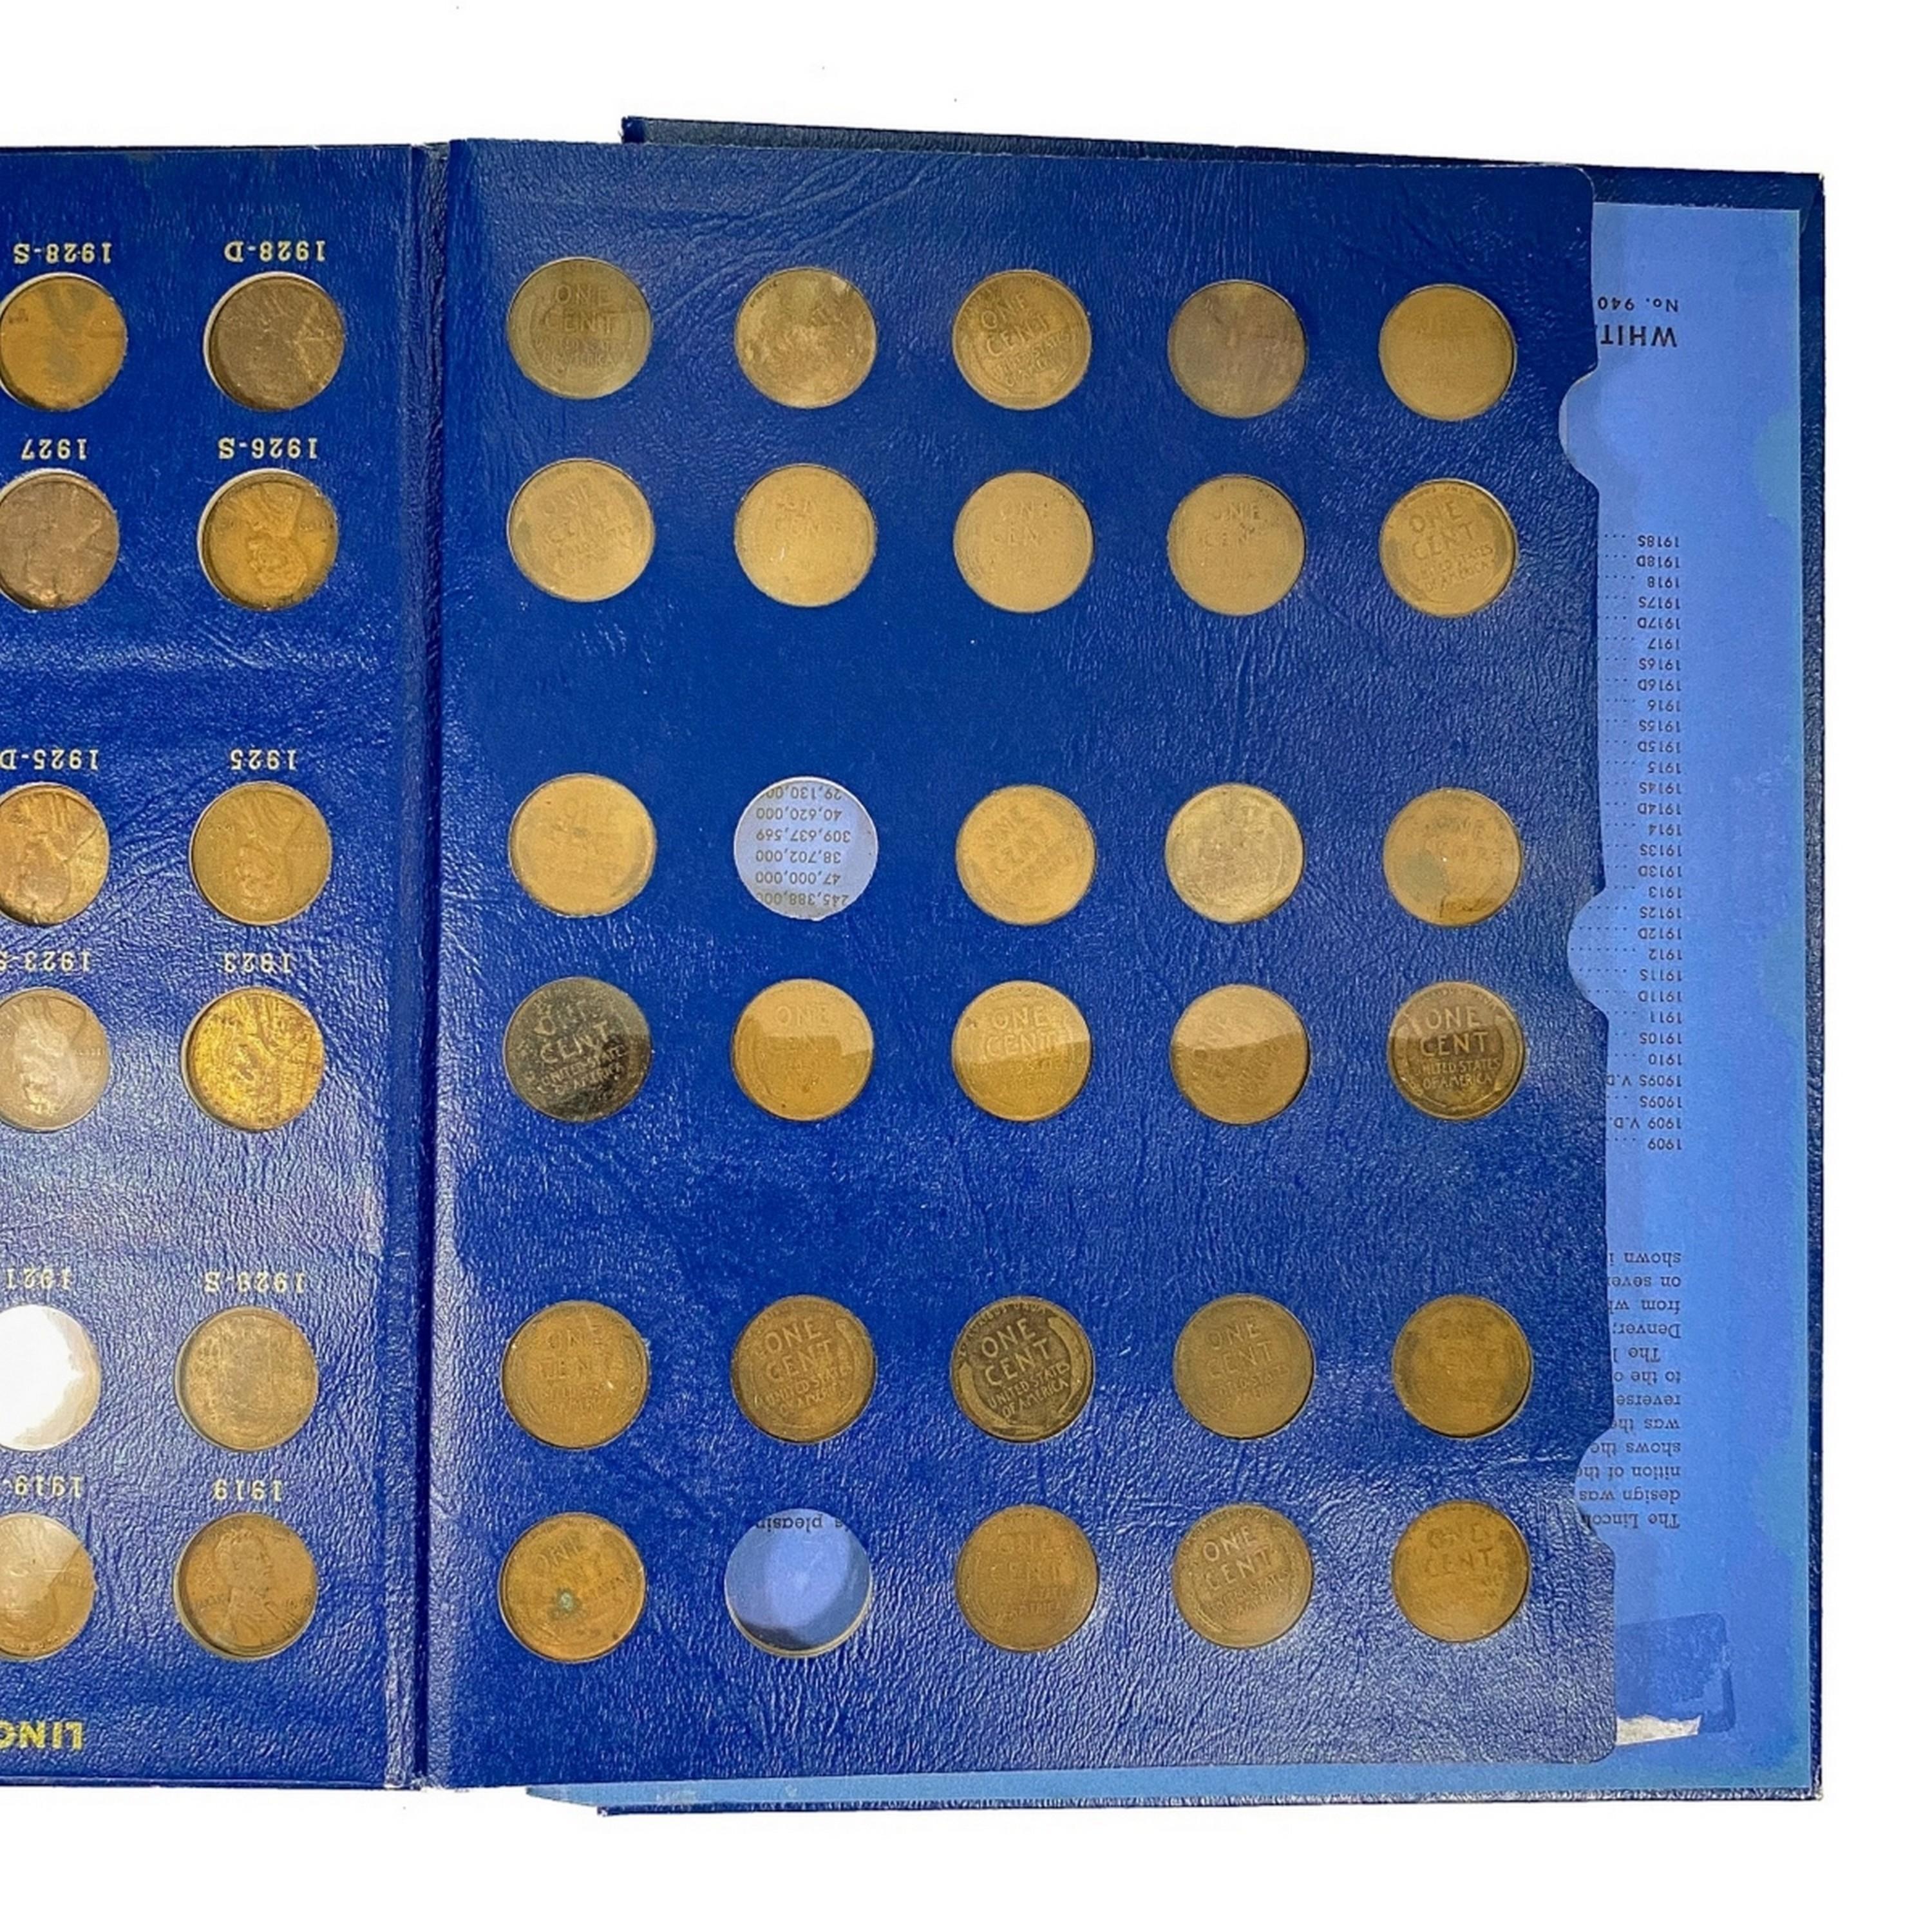 1909 - 1940 Lincoln Head Cent Book (87 Coins)